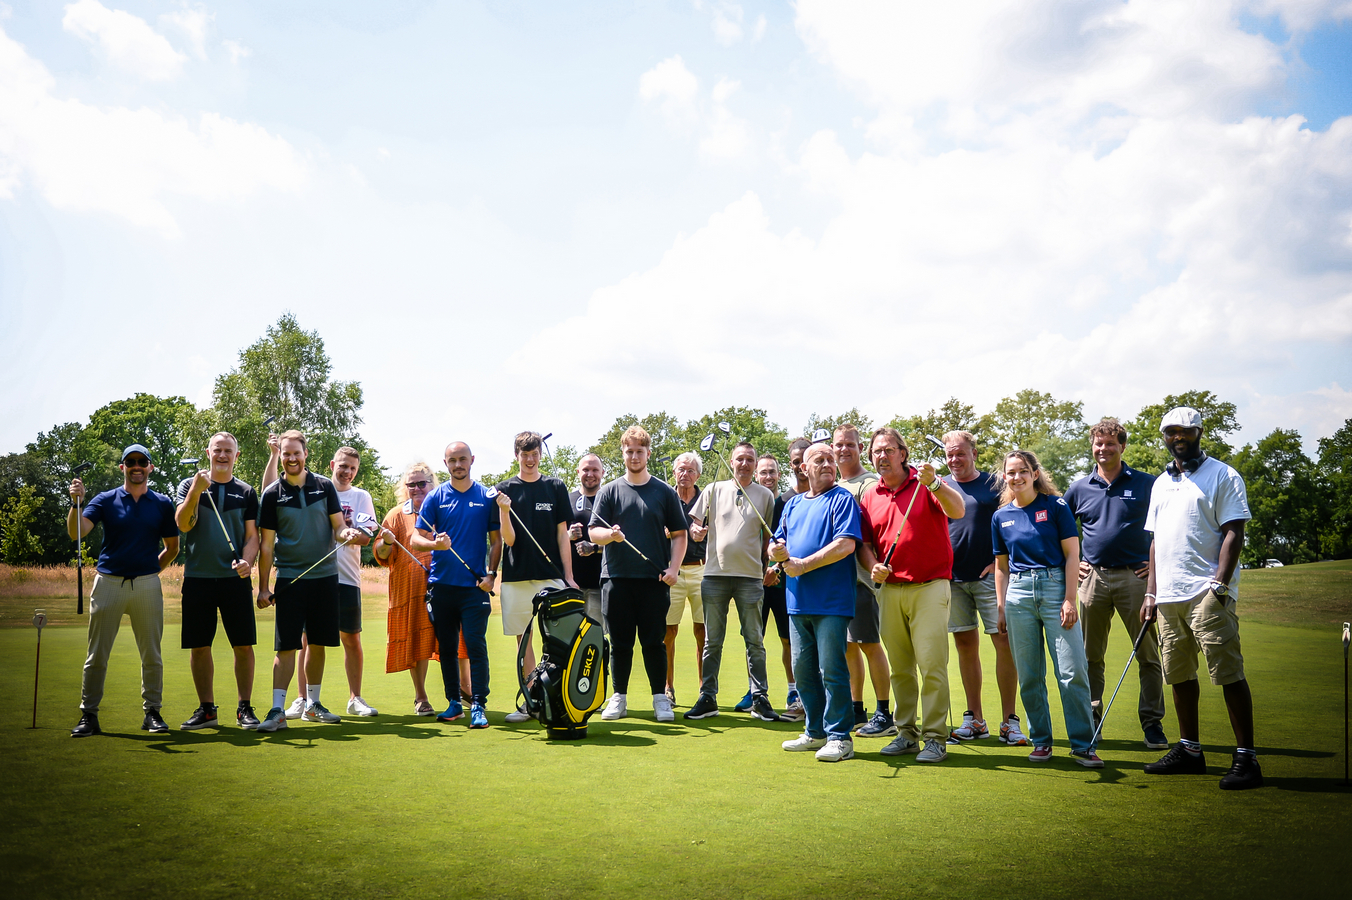 Golfclinic brengt dak- en thuislozen mensen en jongeren samen op de golfbaan